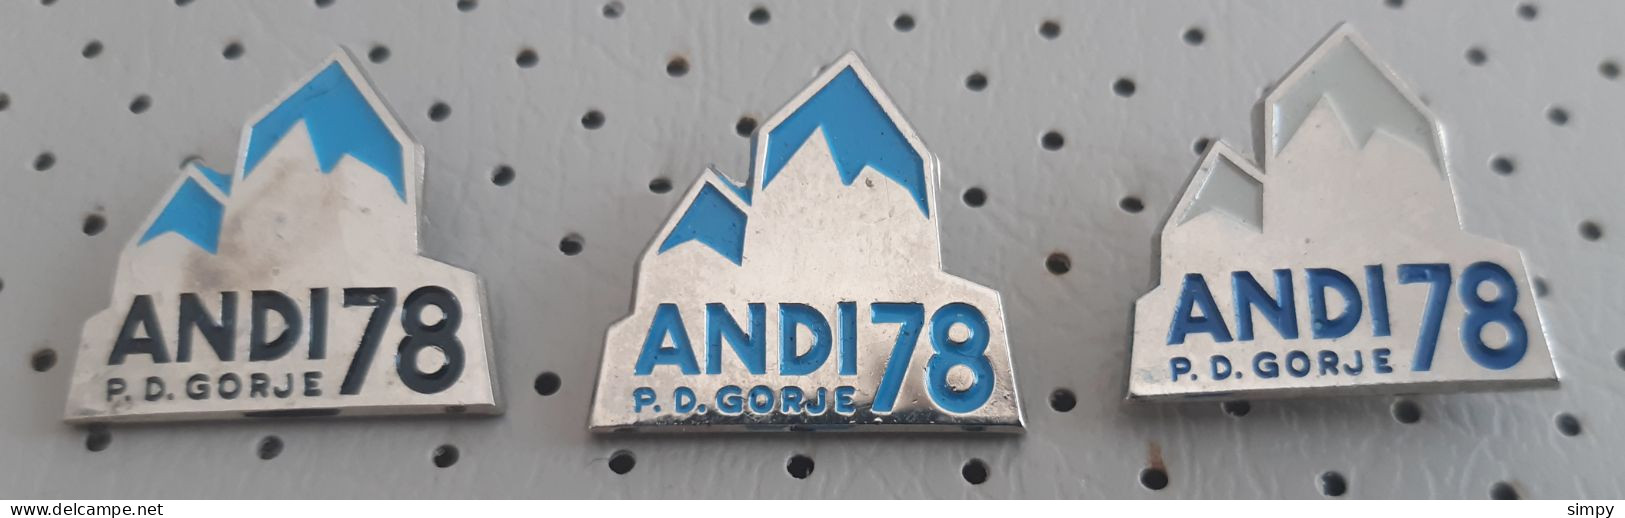 Yugoslav Expedition ANDES 1978 PD Gorje Slovenia Alpinism Mountaineering Pins - Alpinismo, Escalada